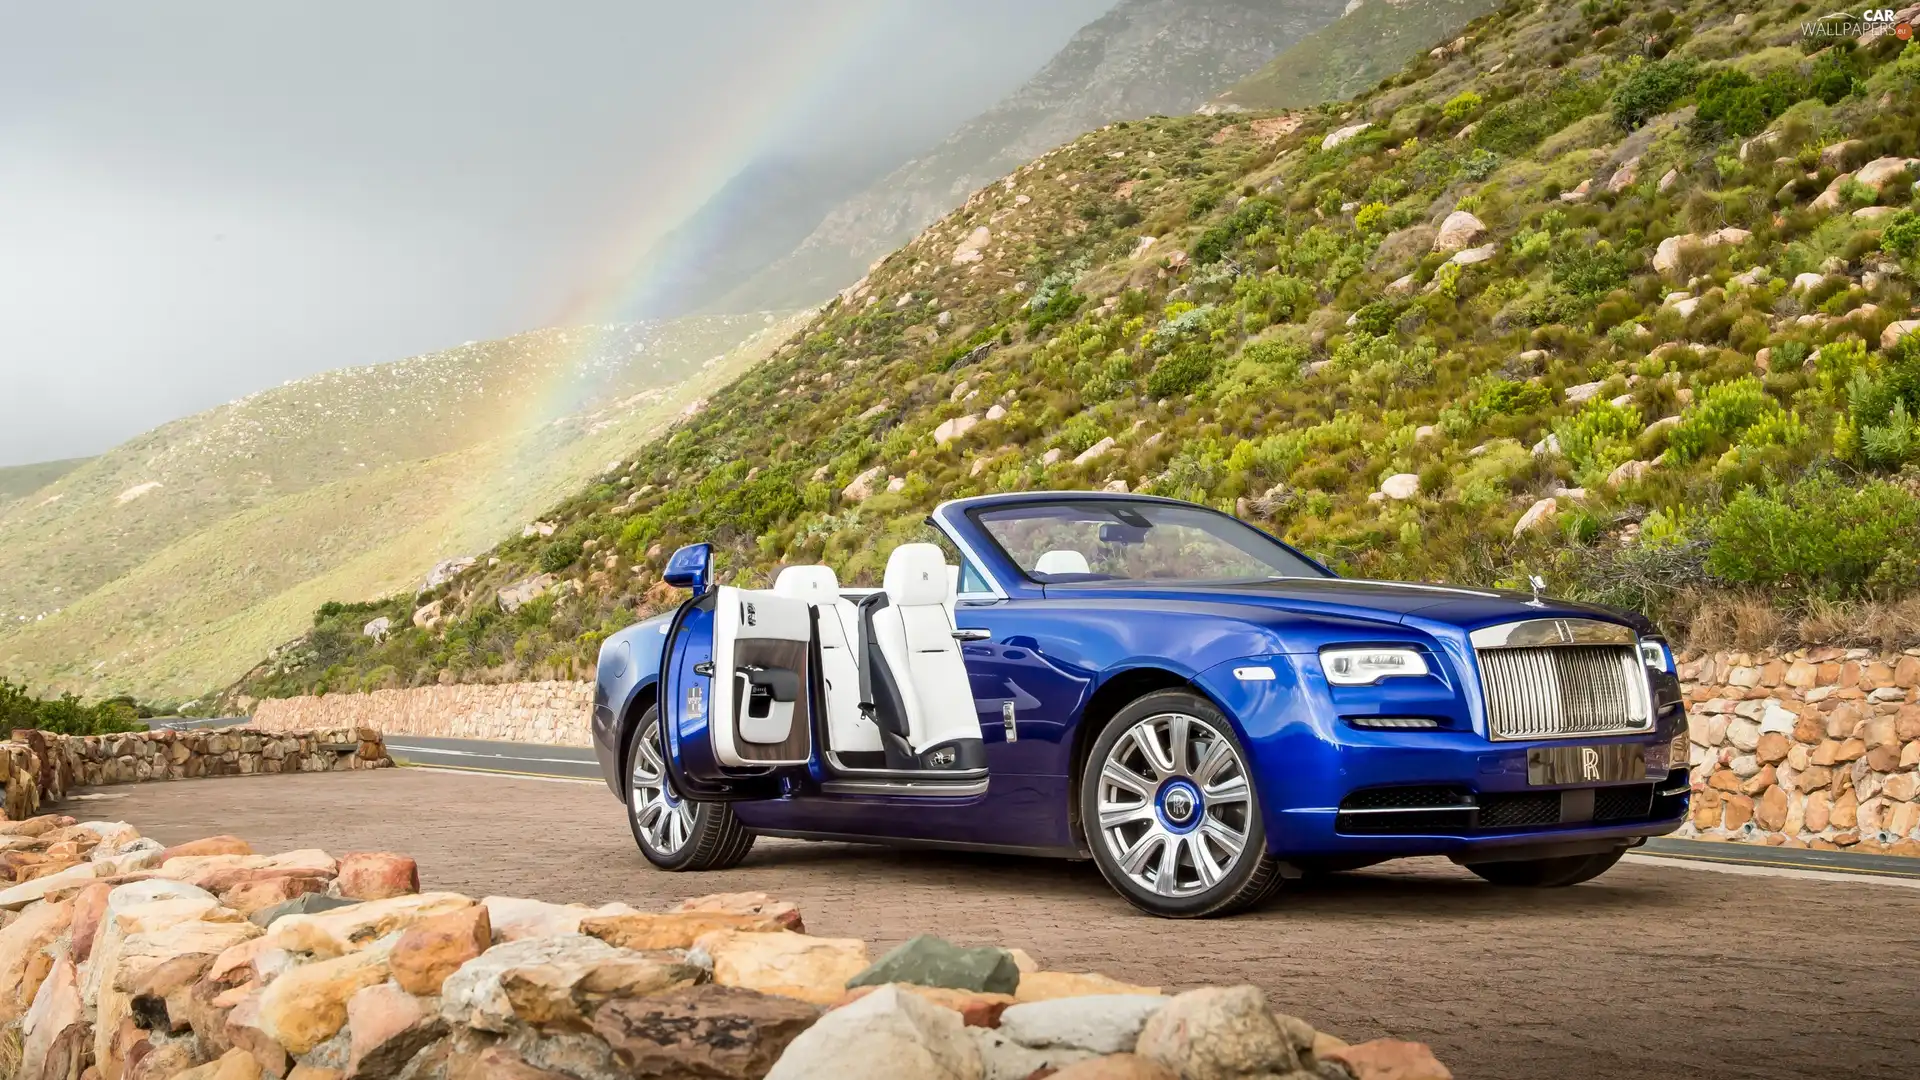 2016, Cabriolet, Way, Great Rainbows, The Hills, Rolls-Royce Dawn, blue, Stones